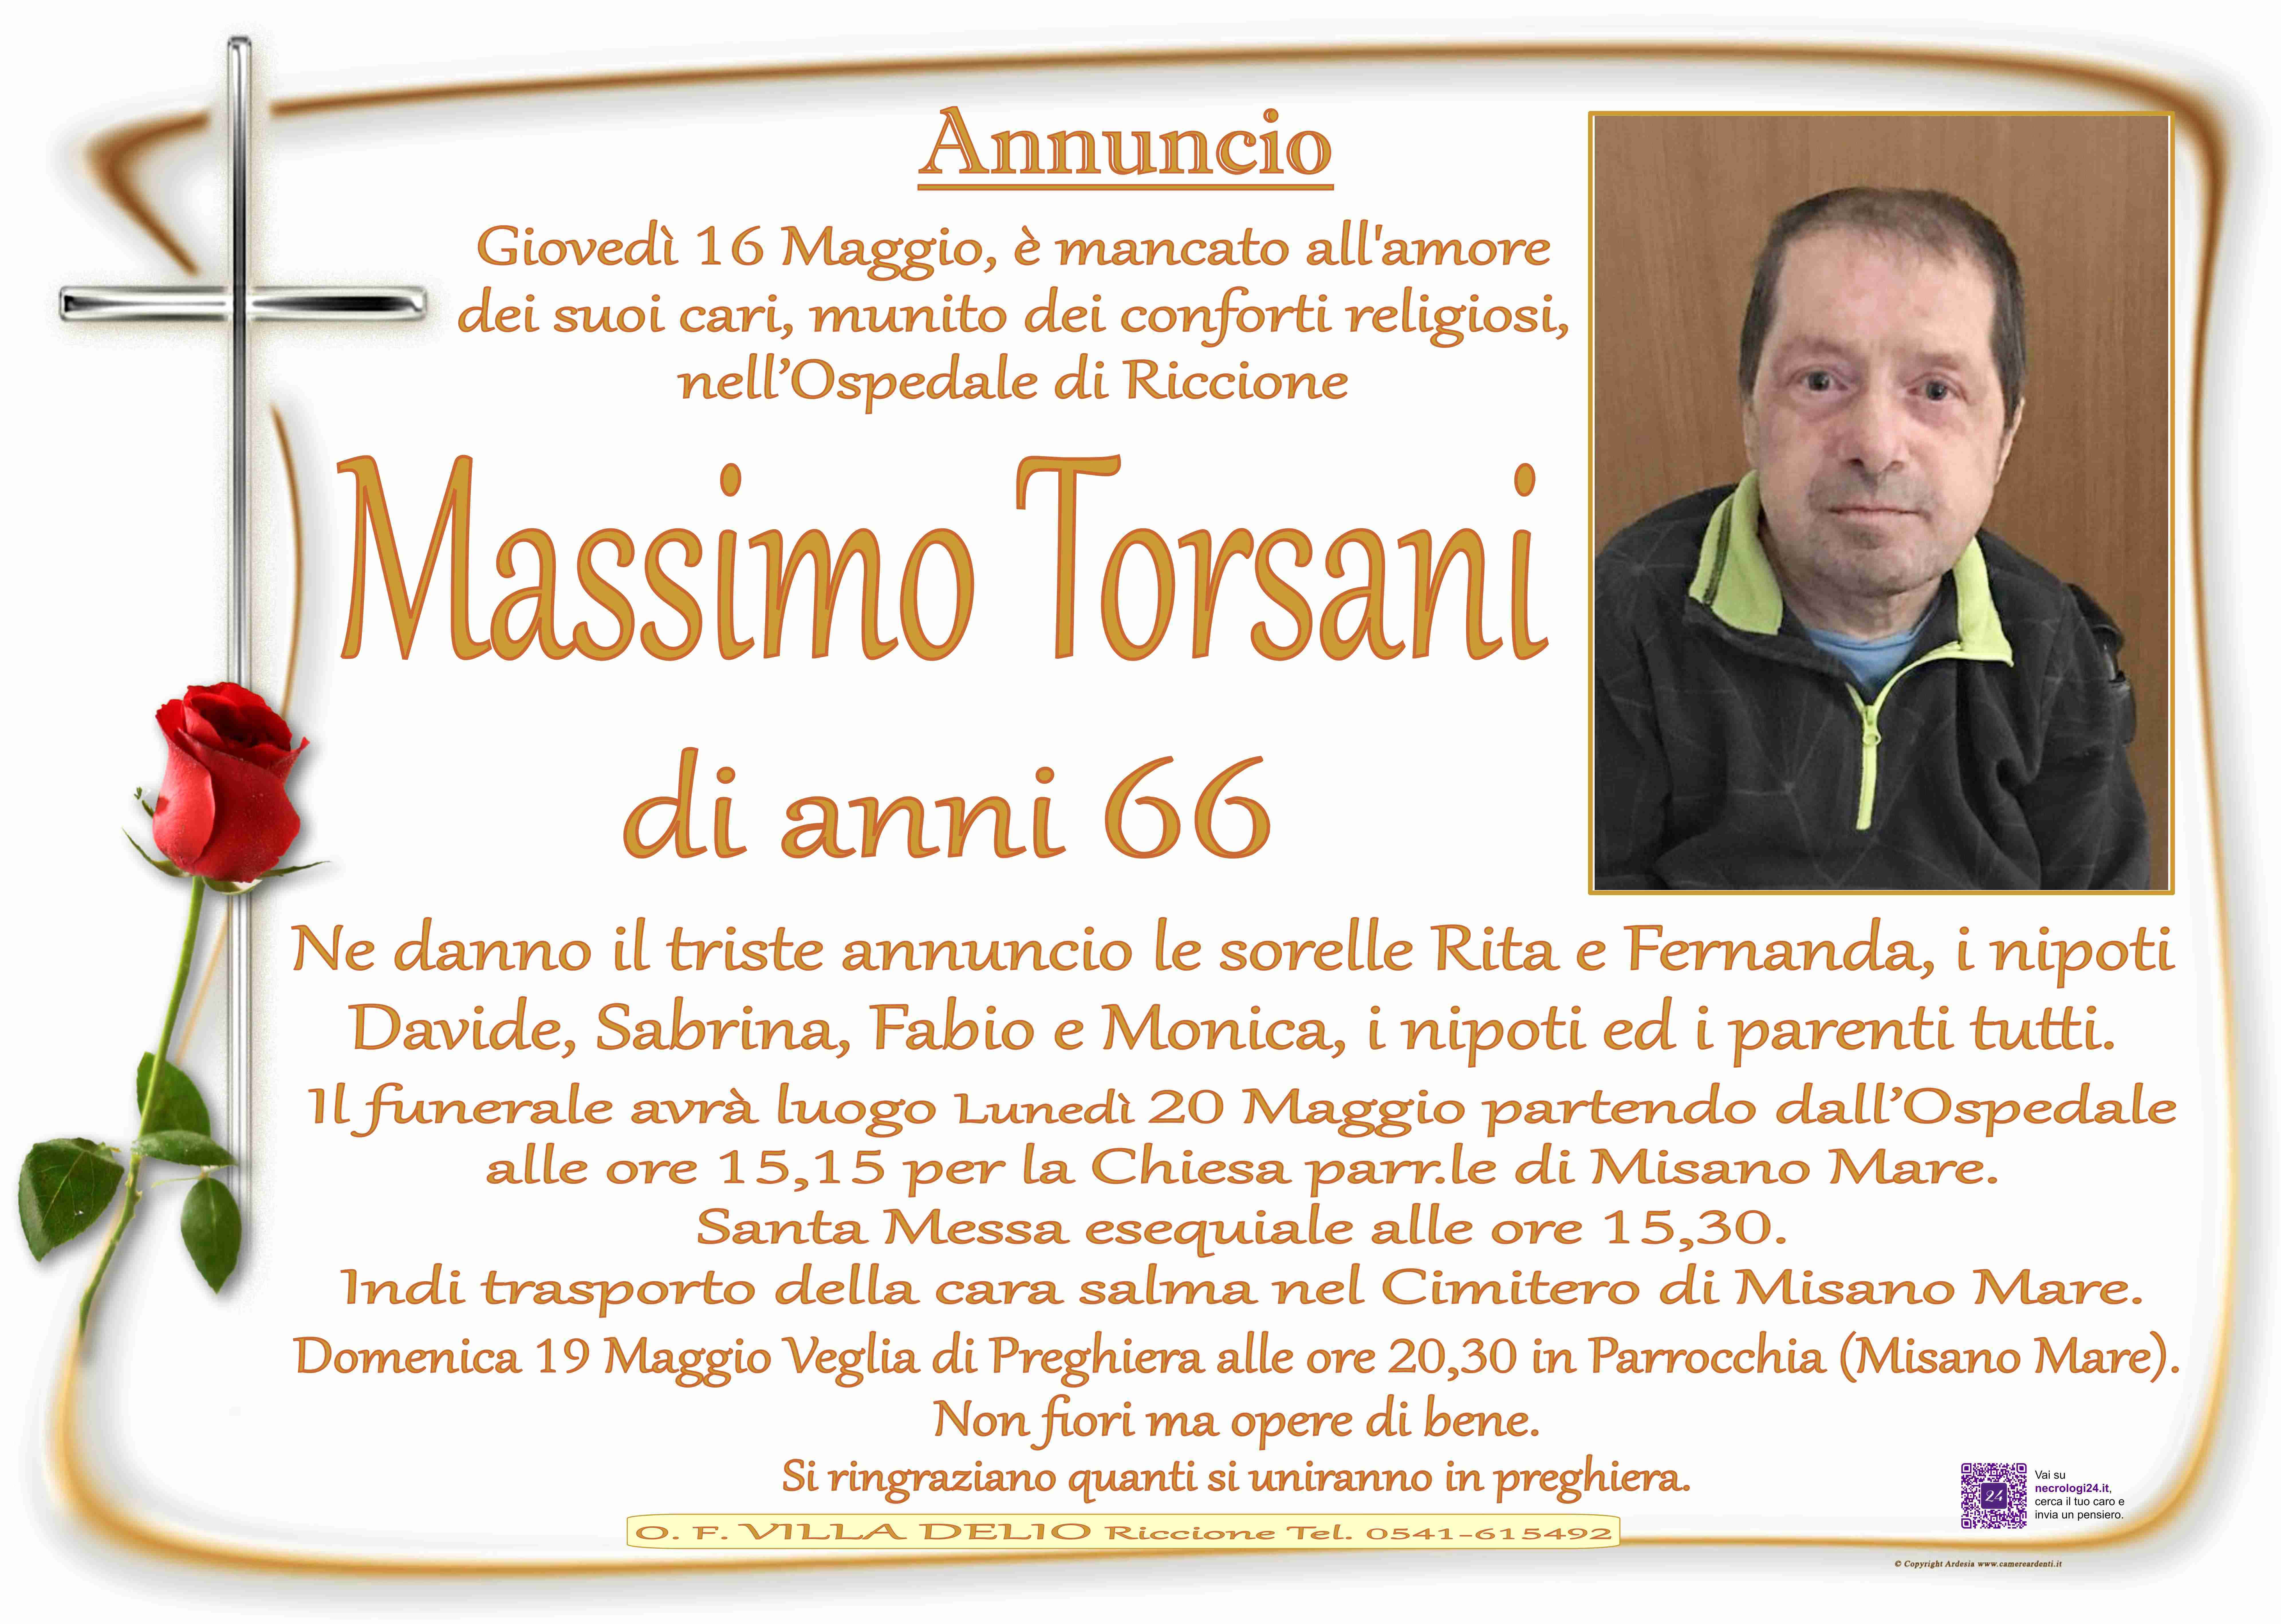 Massimo Torsani